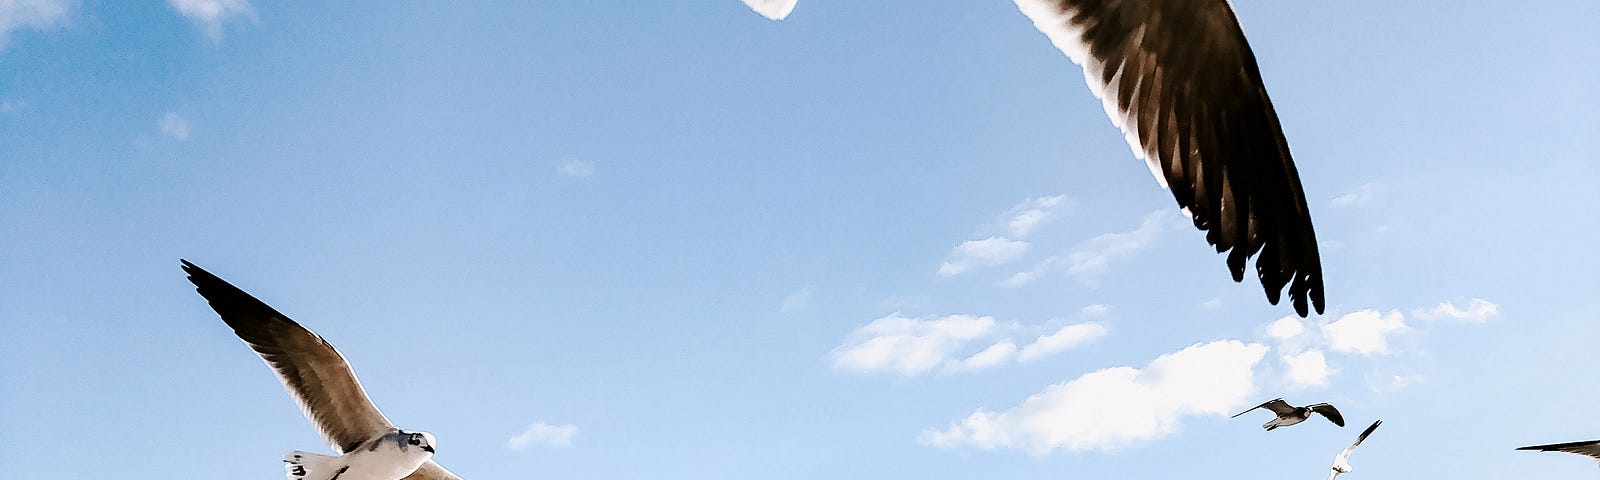 seagulls flying against a blue sky, with sea underneath.